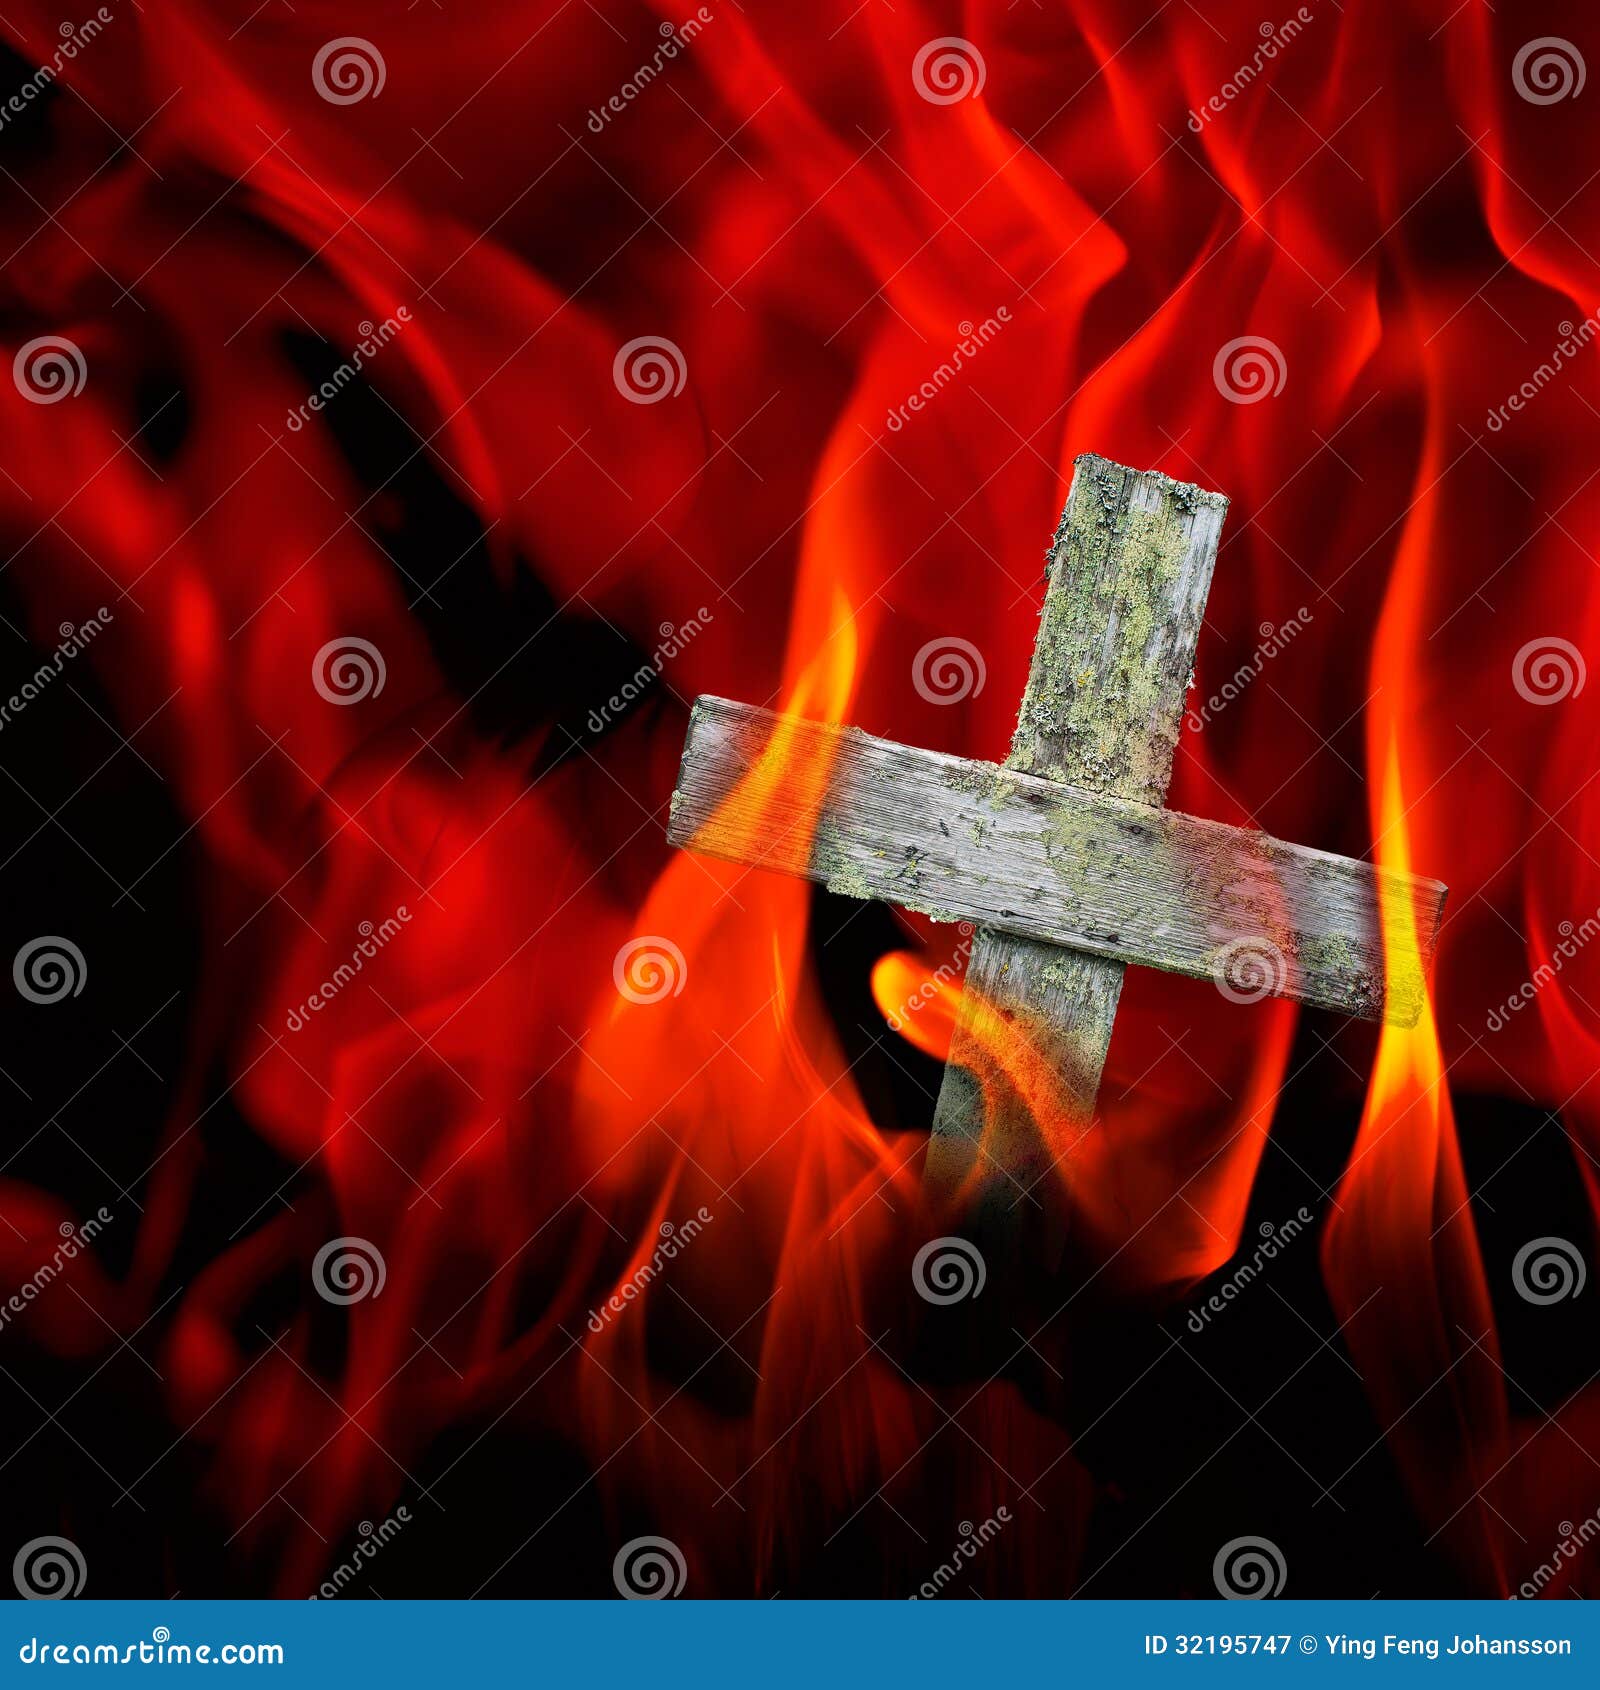 Burning Cross Royalty Free Stock Photography - Image: 32195747